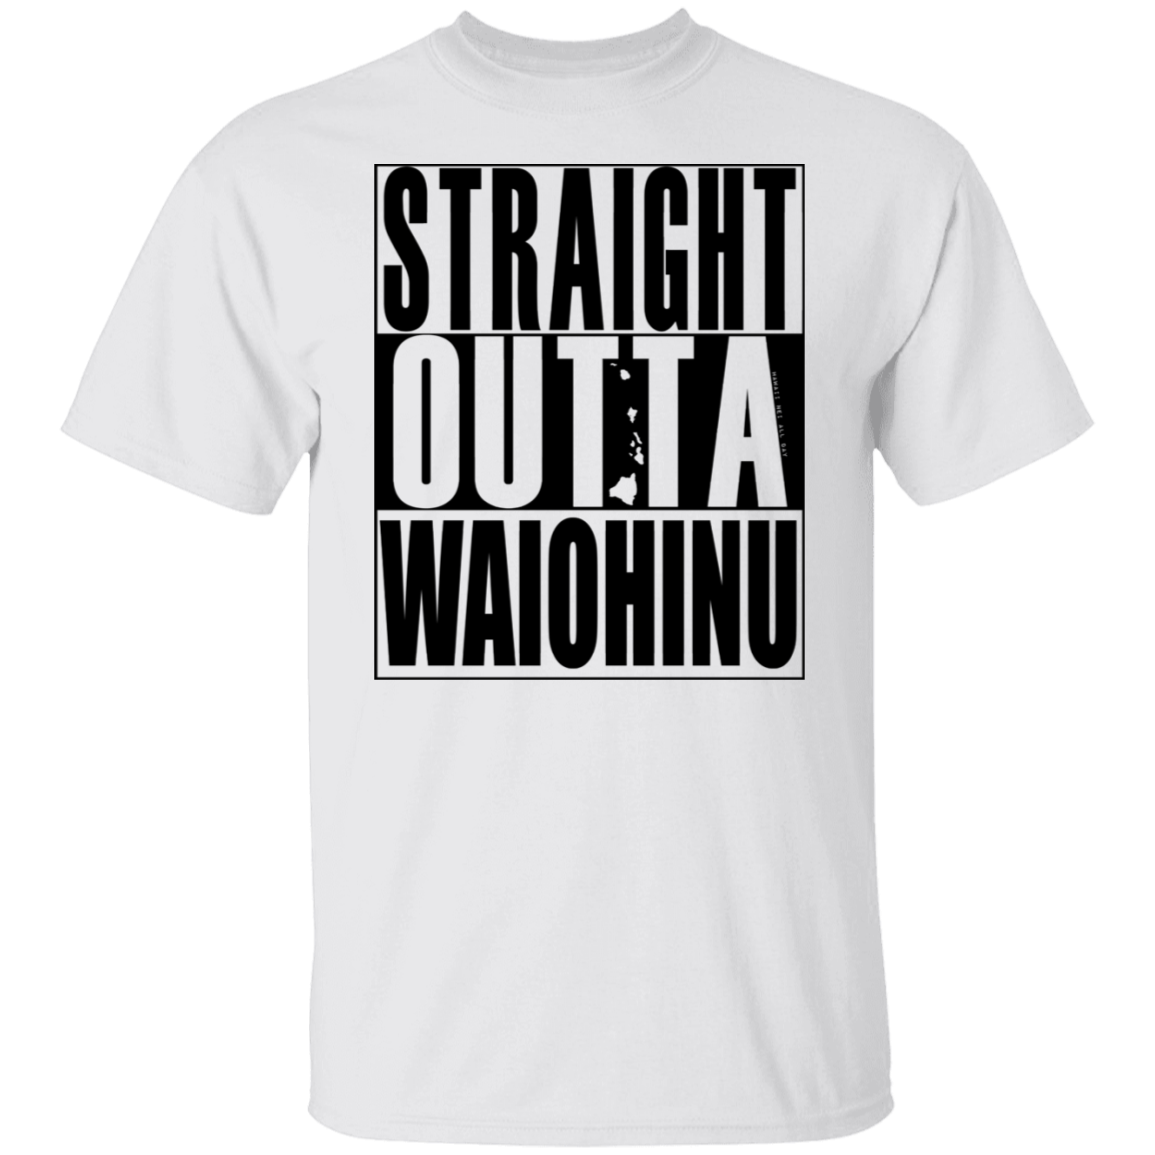 Straight Outta Waiohinu (black ink) T-Shirt